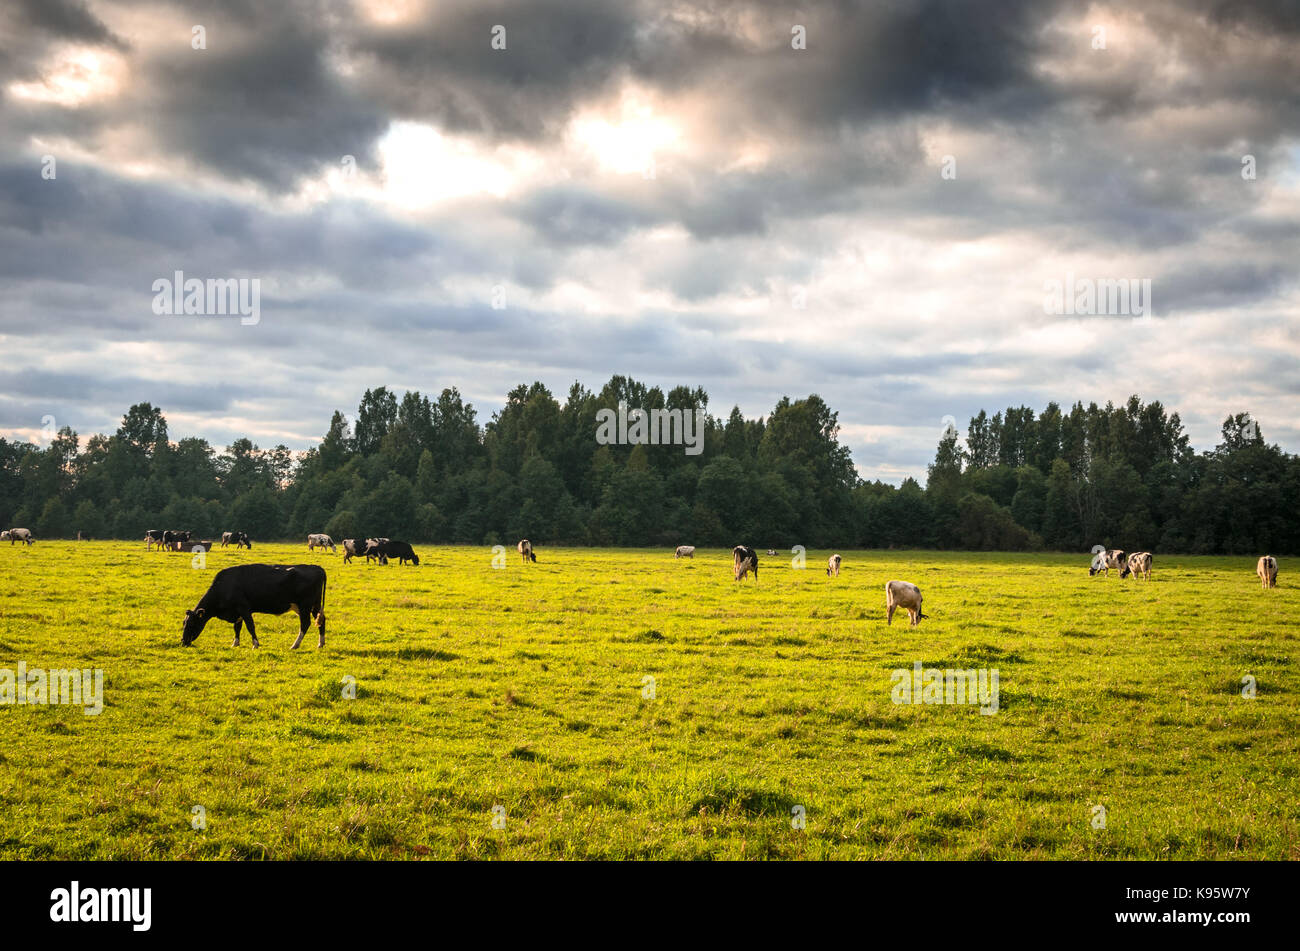 Herd of cattle grazing in a field Stock Photo